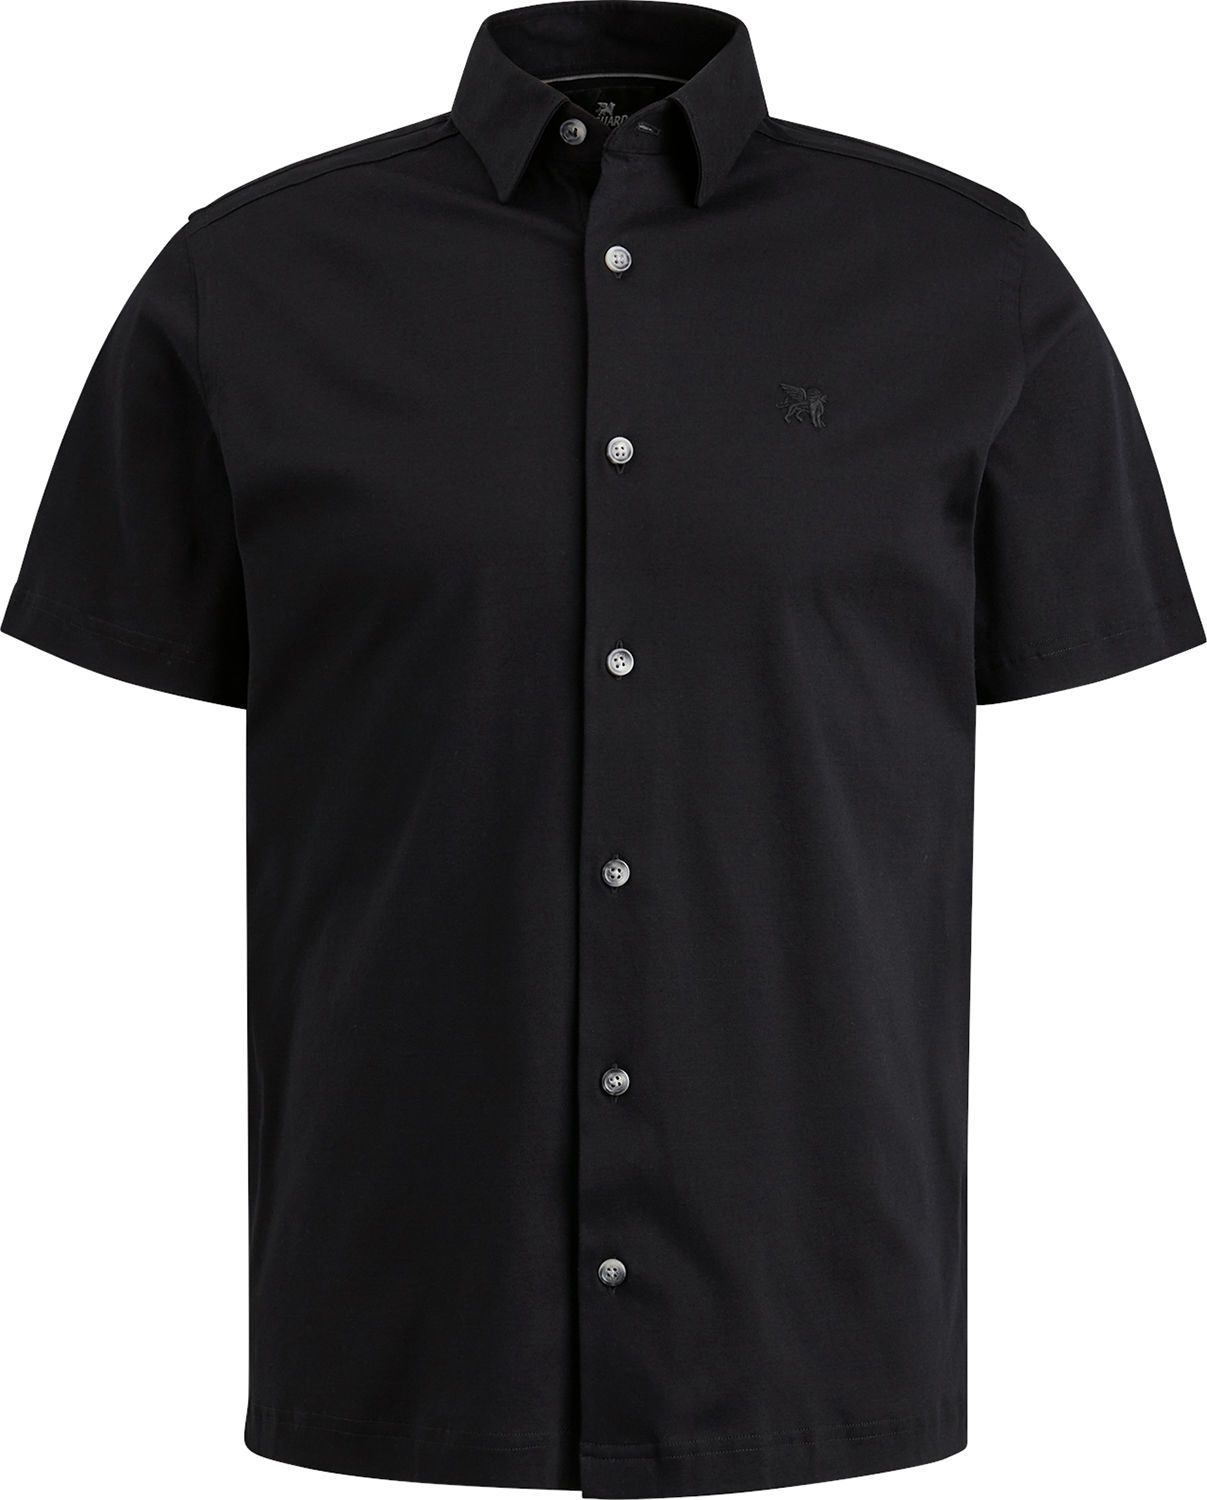 Vanguard Overhemd Zwart